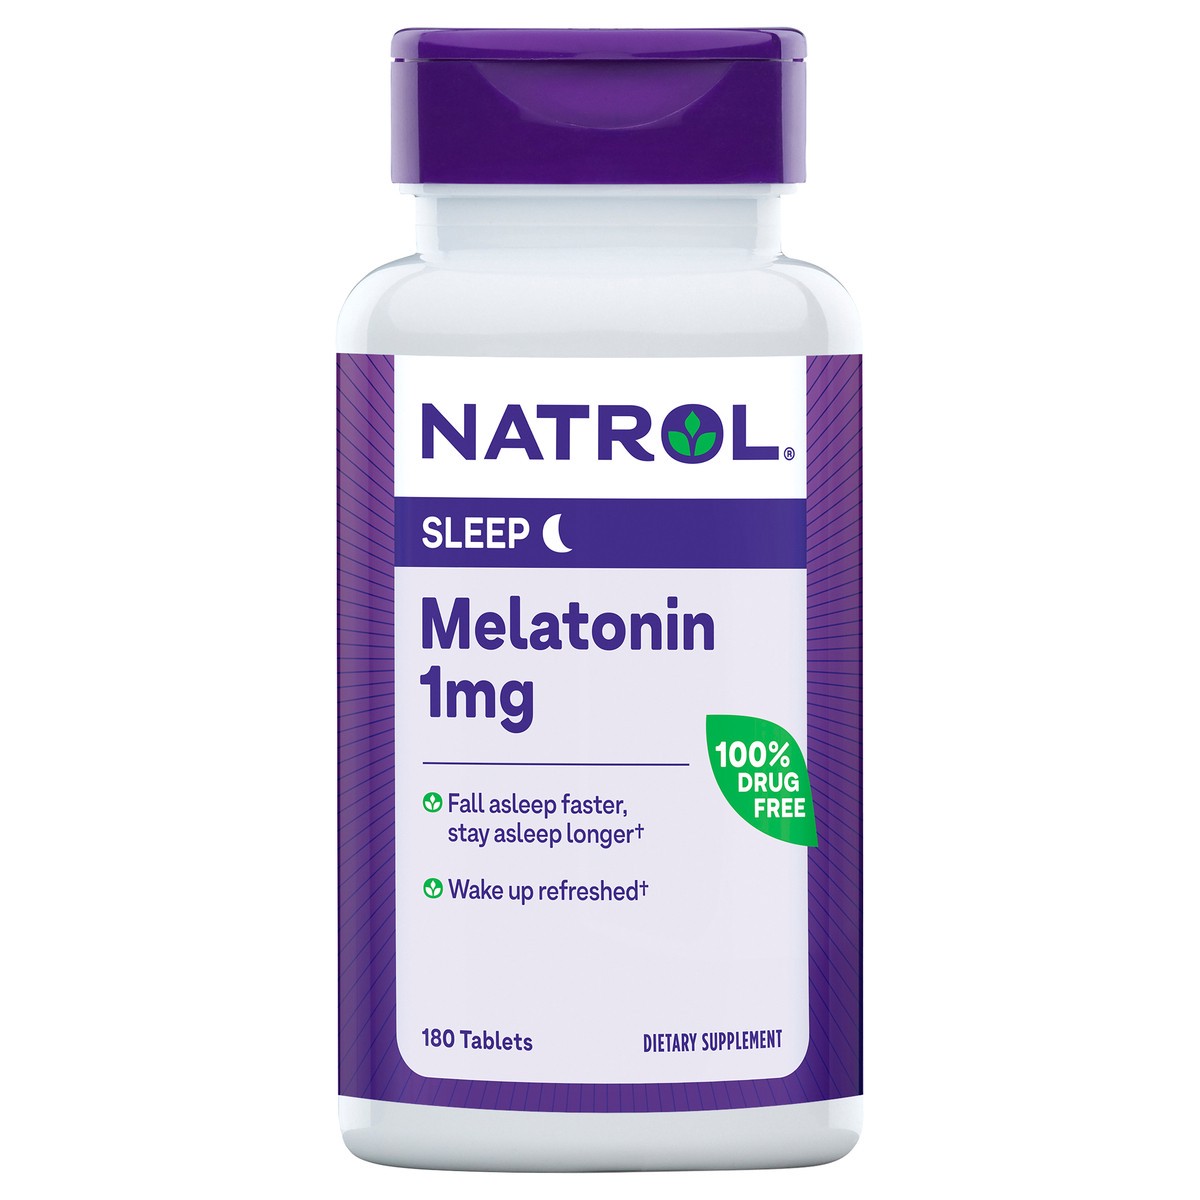 slide 1 of 14, Natrol 1mg Melatonin Sleep Aid Tablets, Fall Asleep Faster, Stay Asleep Longer, Dietary Supplement, 180 Count, 180 ct